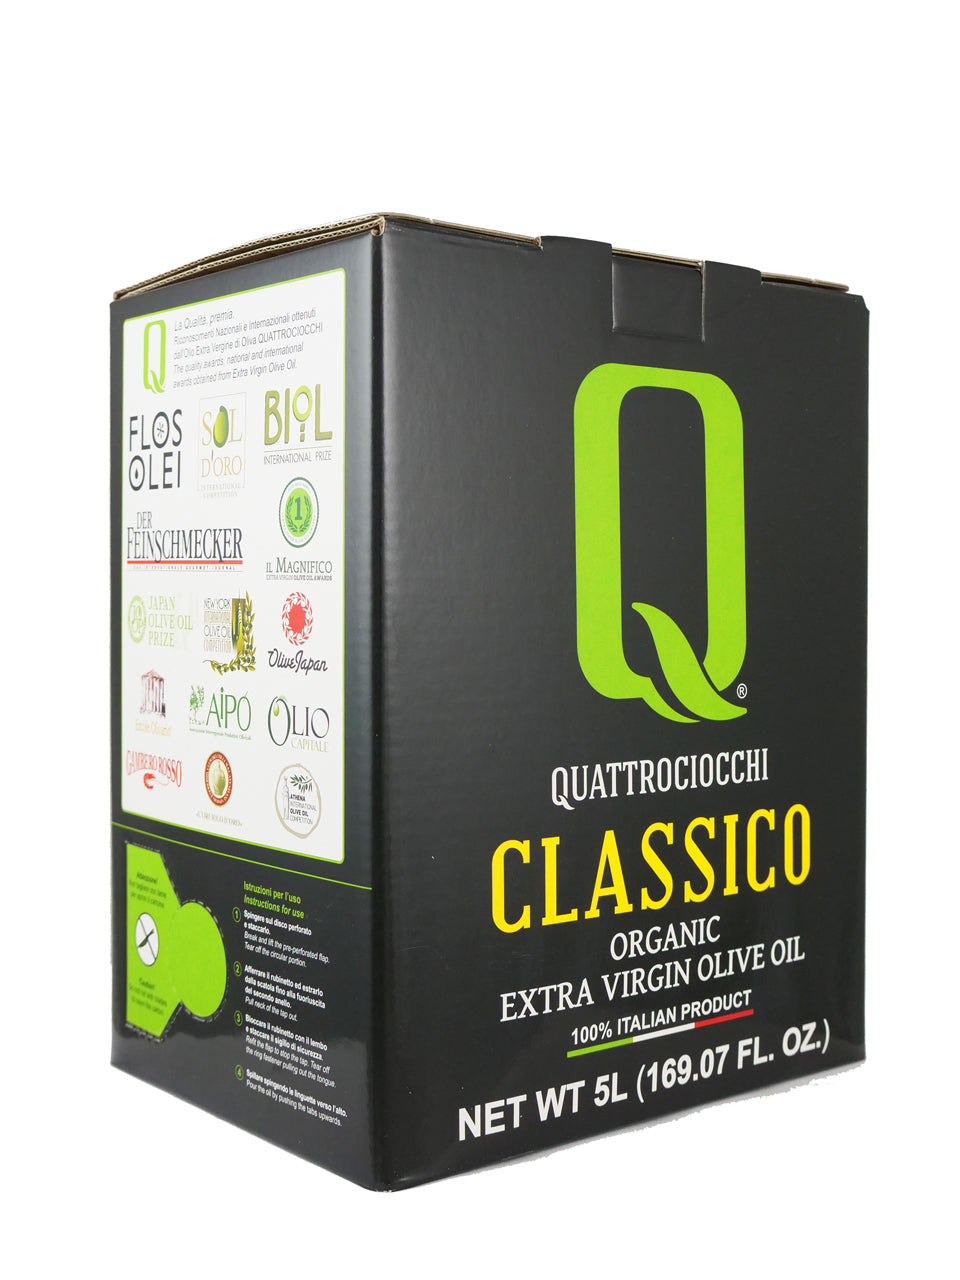 Quattrociocchi Classico Organic 5L Bag-in-Box 4-Pack